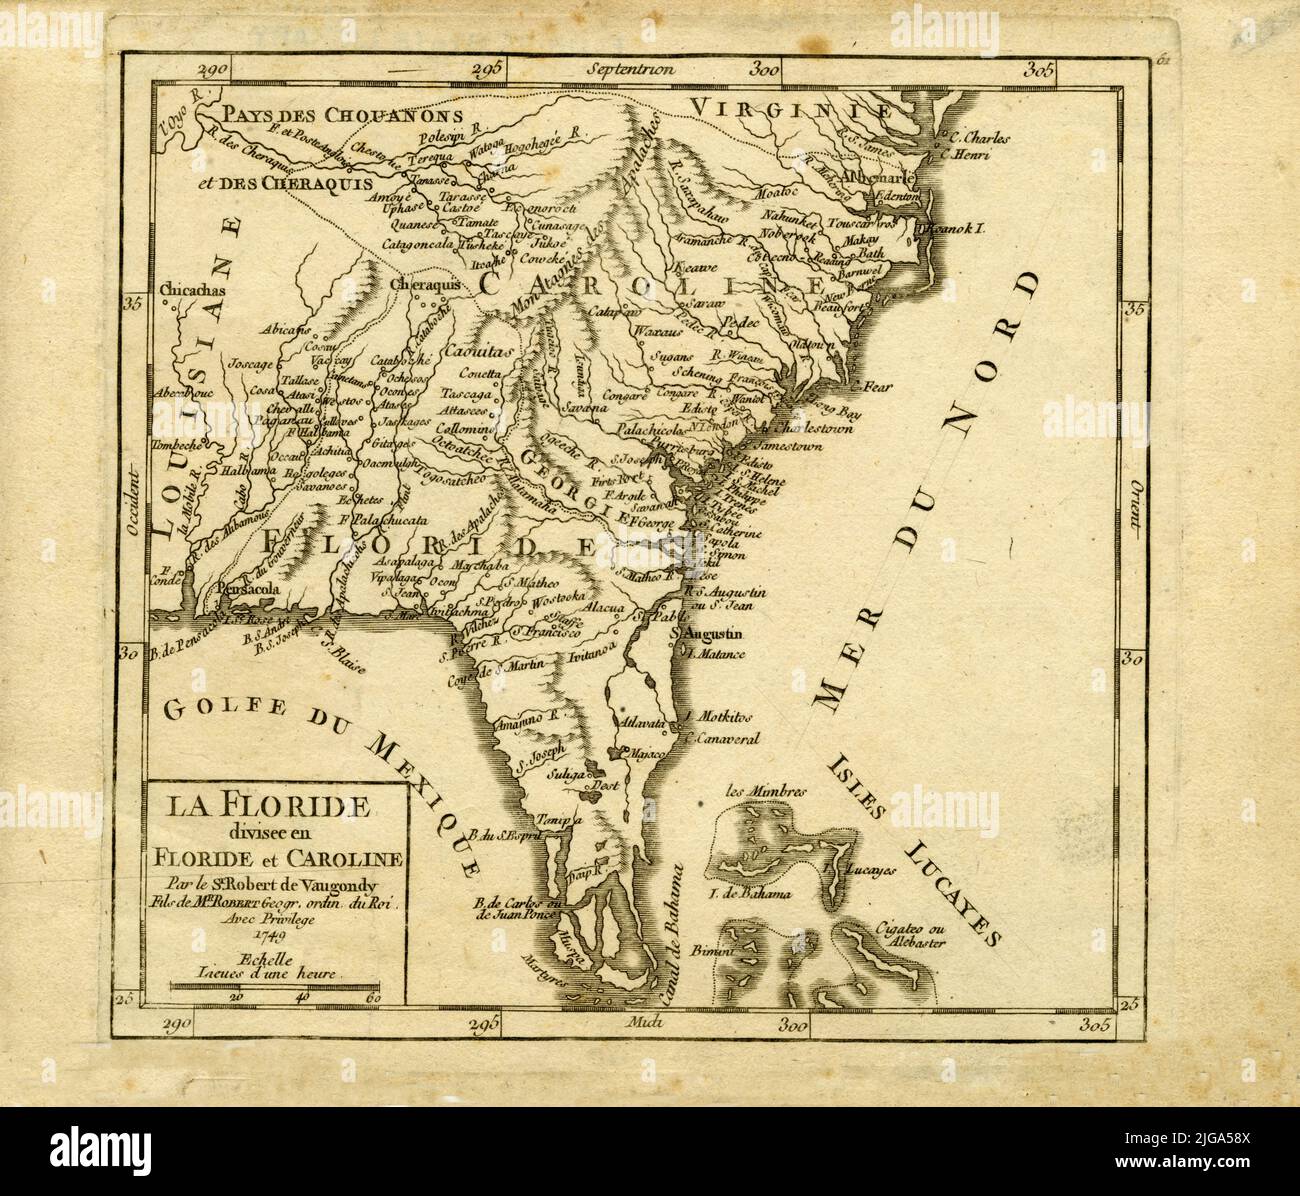 French Map of Florida and Carolinas, 1749, by Gilles Robert de Vaugondy Stock Photo